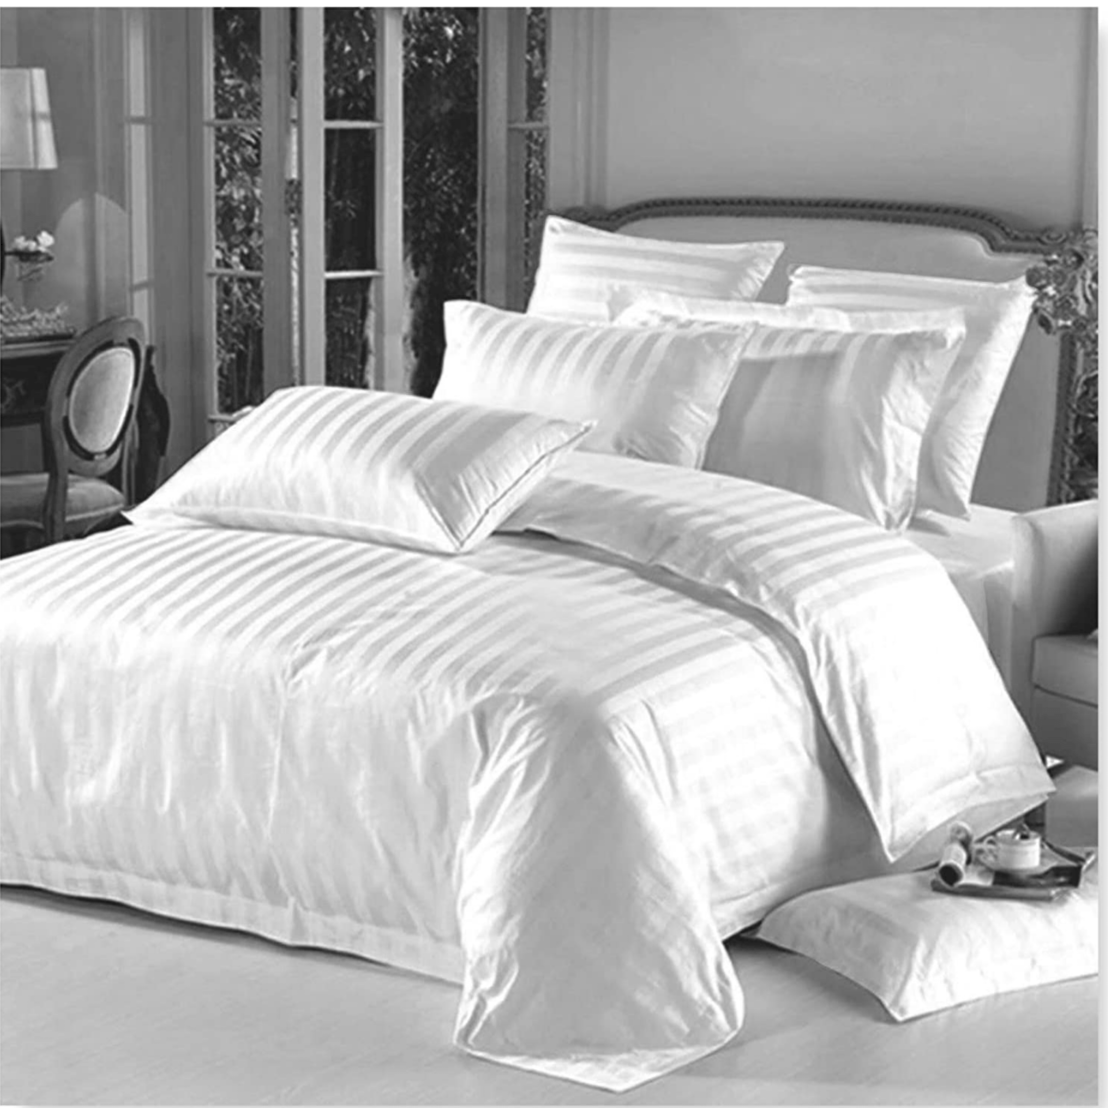 Grace D09- 3PC Luxury White Satin Stripe King Size Duvet Cover Set.